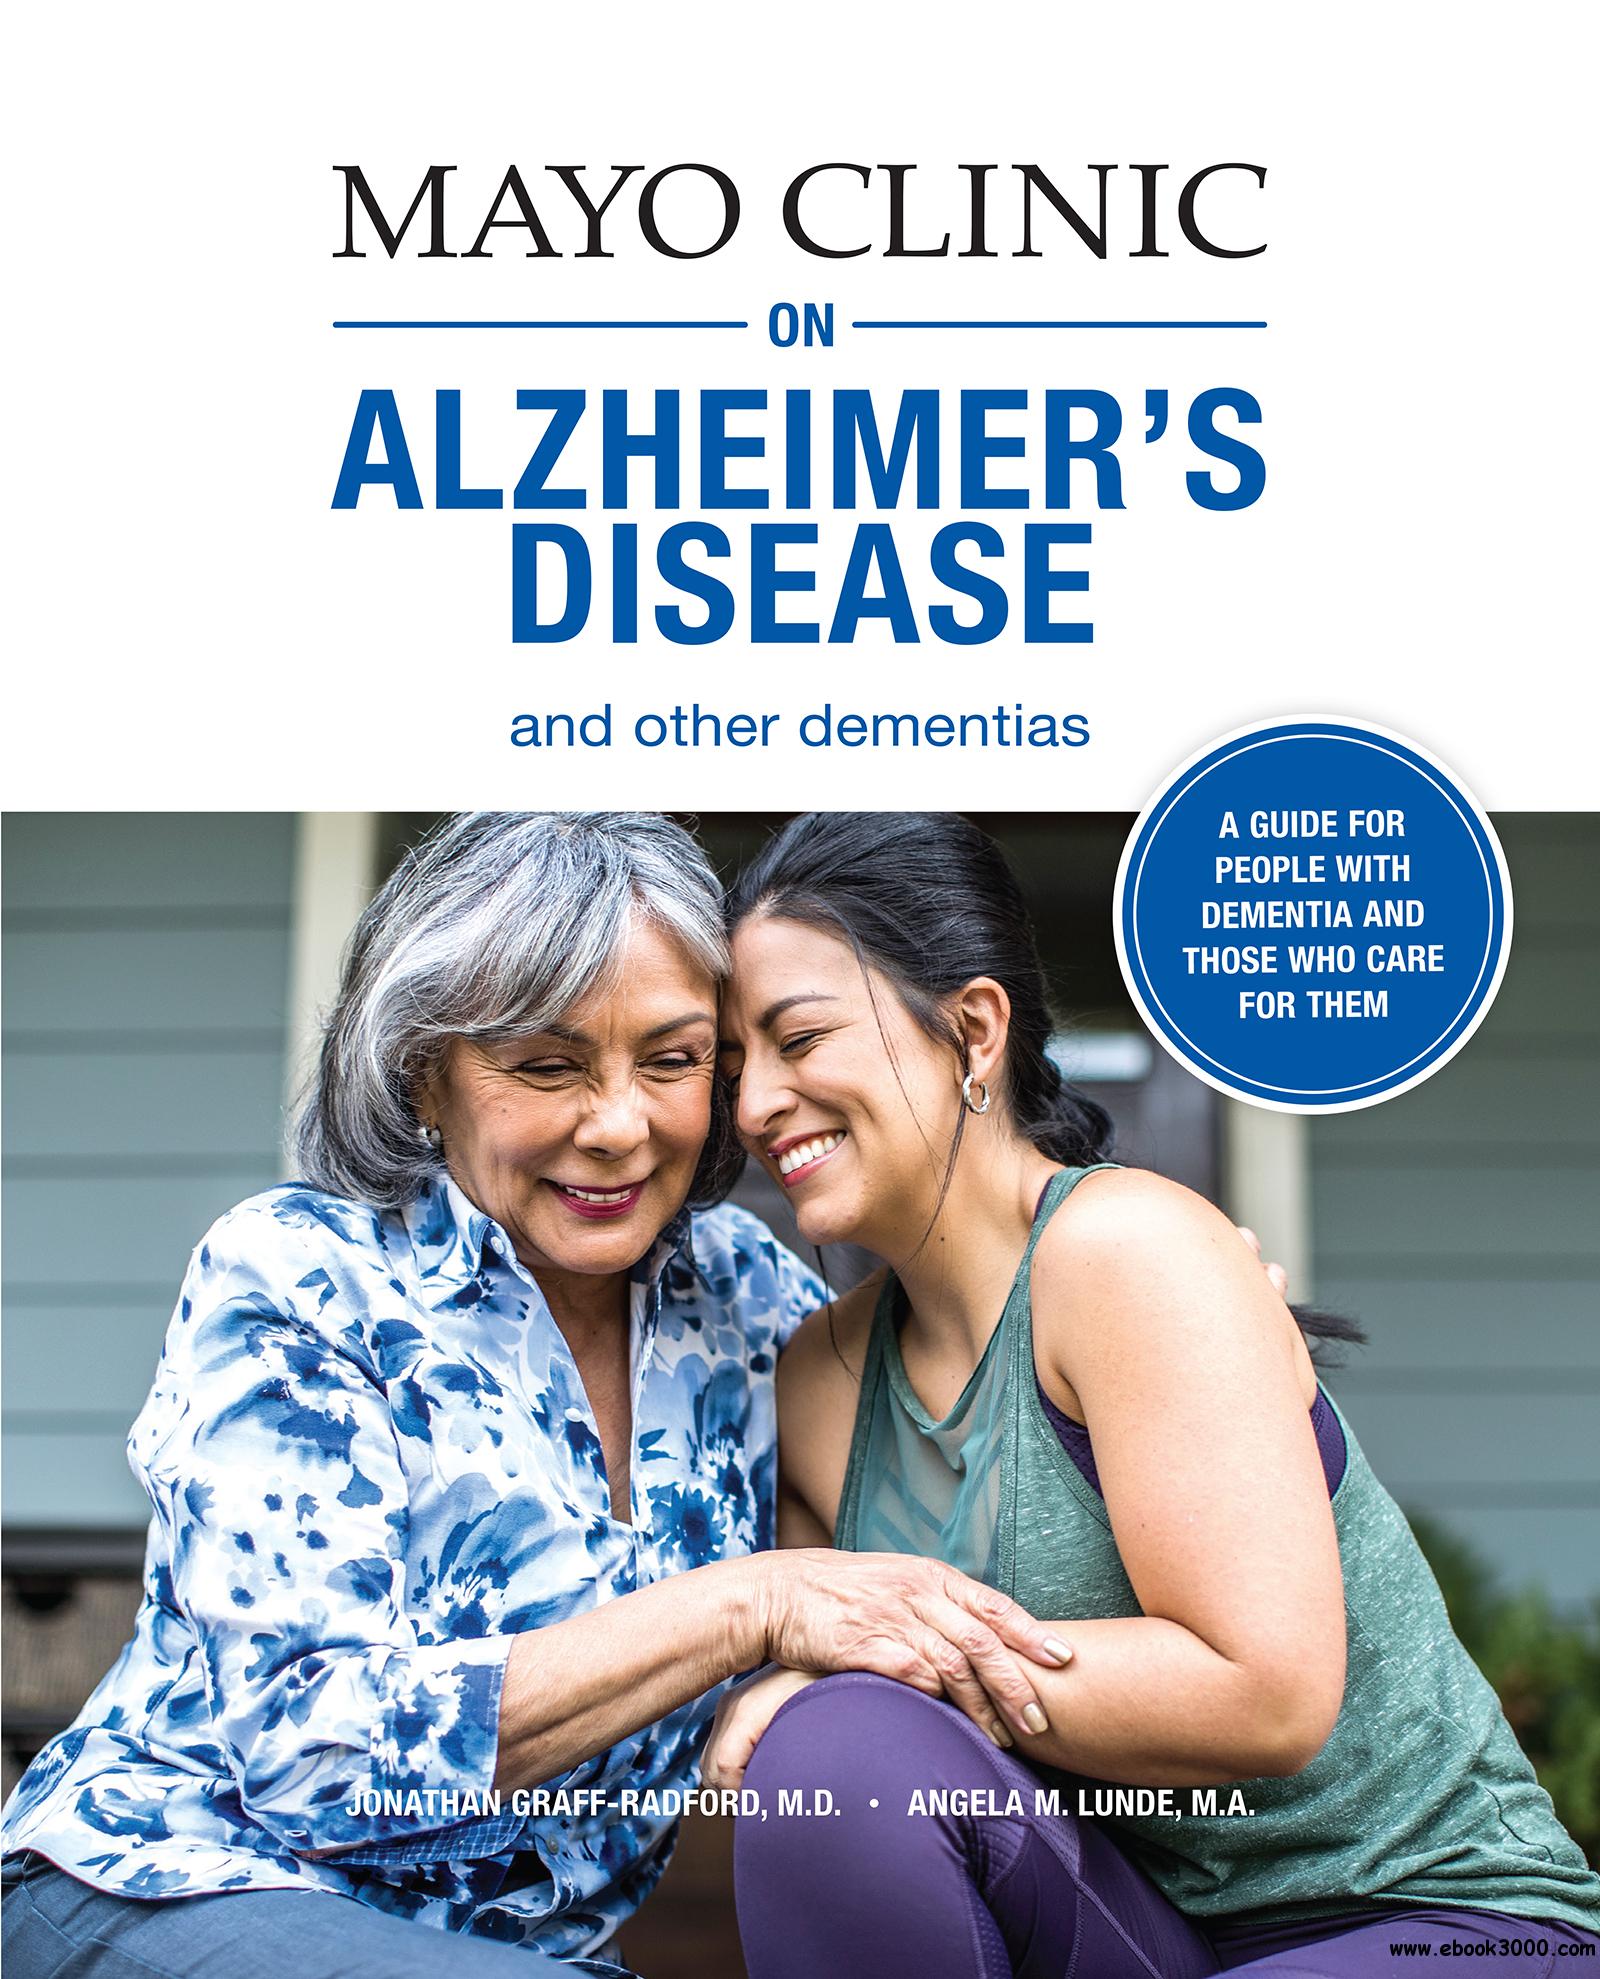 Mayo Clinic on Alzheimer